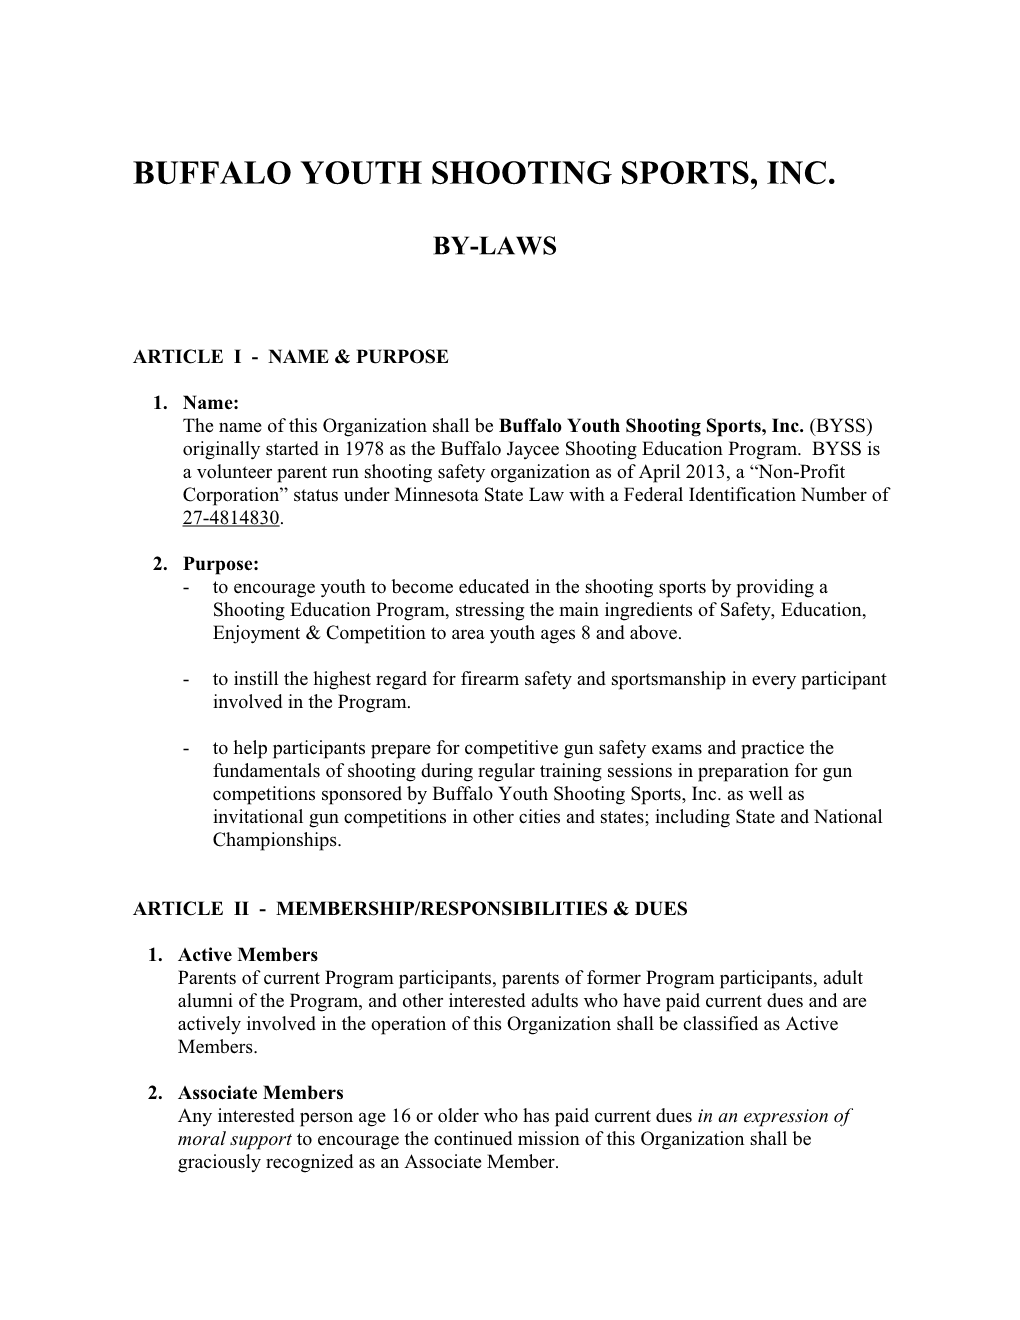 Buffalo Youth Shooting Sports